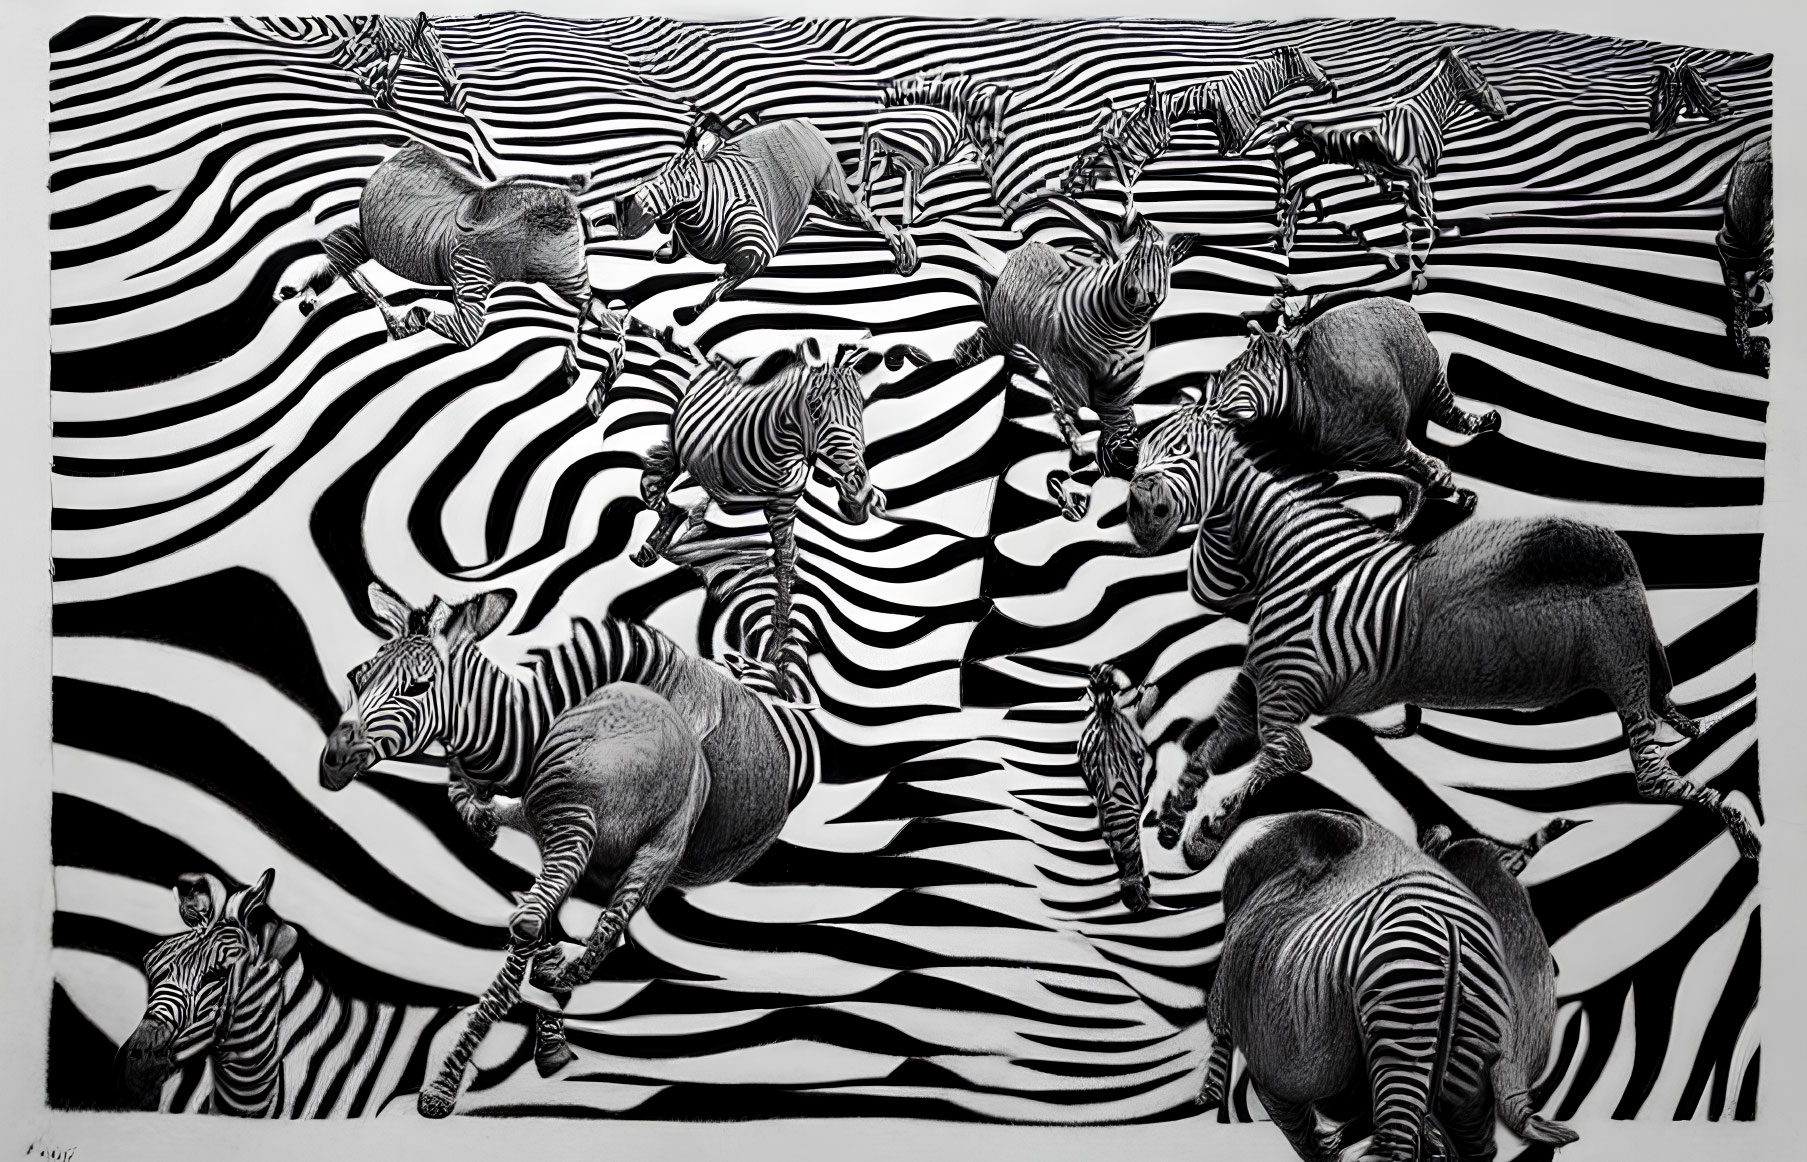 Monochrome illustration of zebras blending with striped background